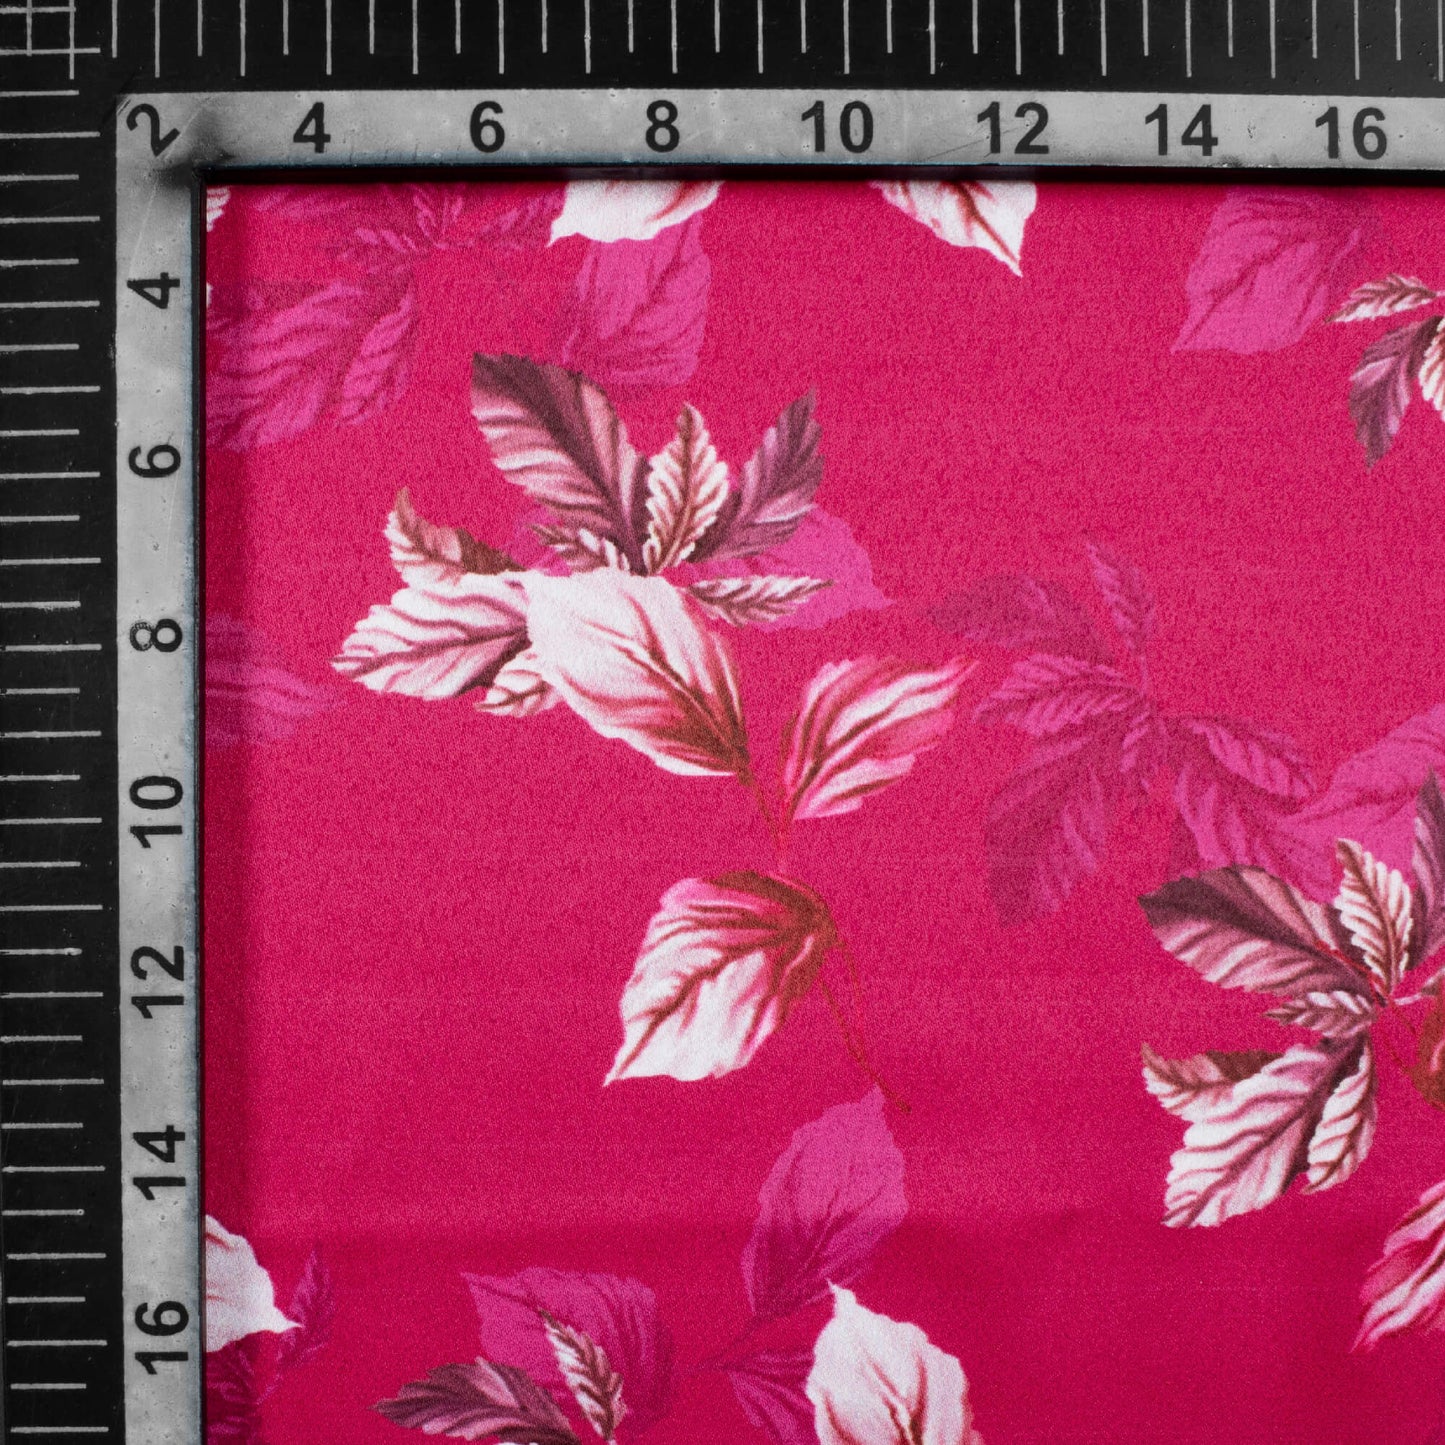 Magenta Pink Leaf Pattern Digital Print Charmeuse Satin Fabric (Width 58 Inches)